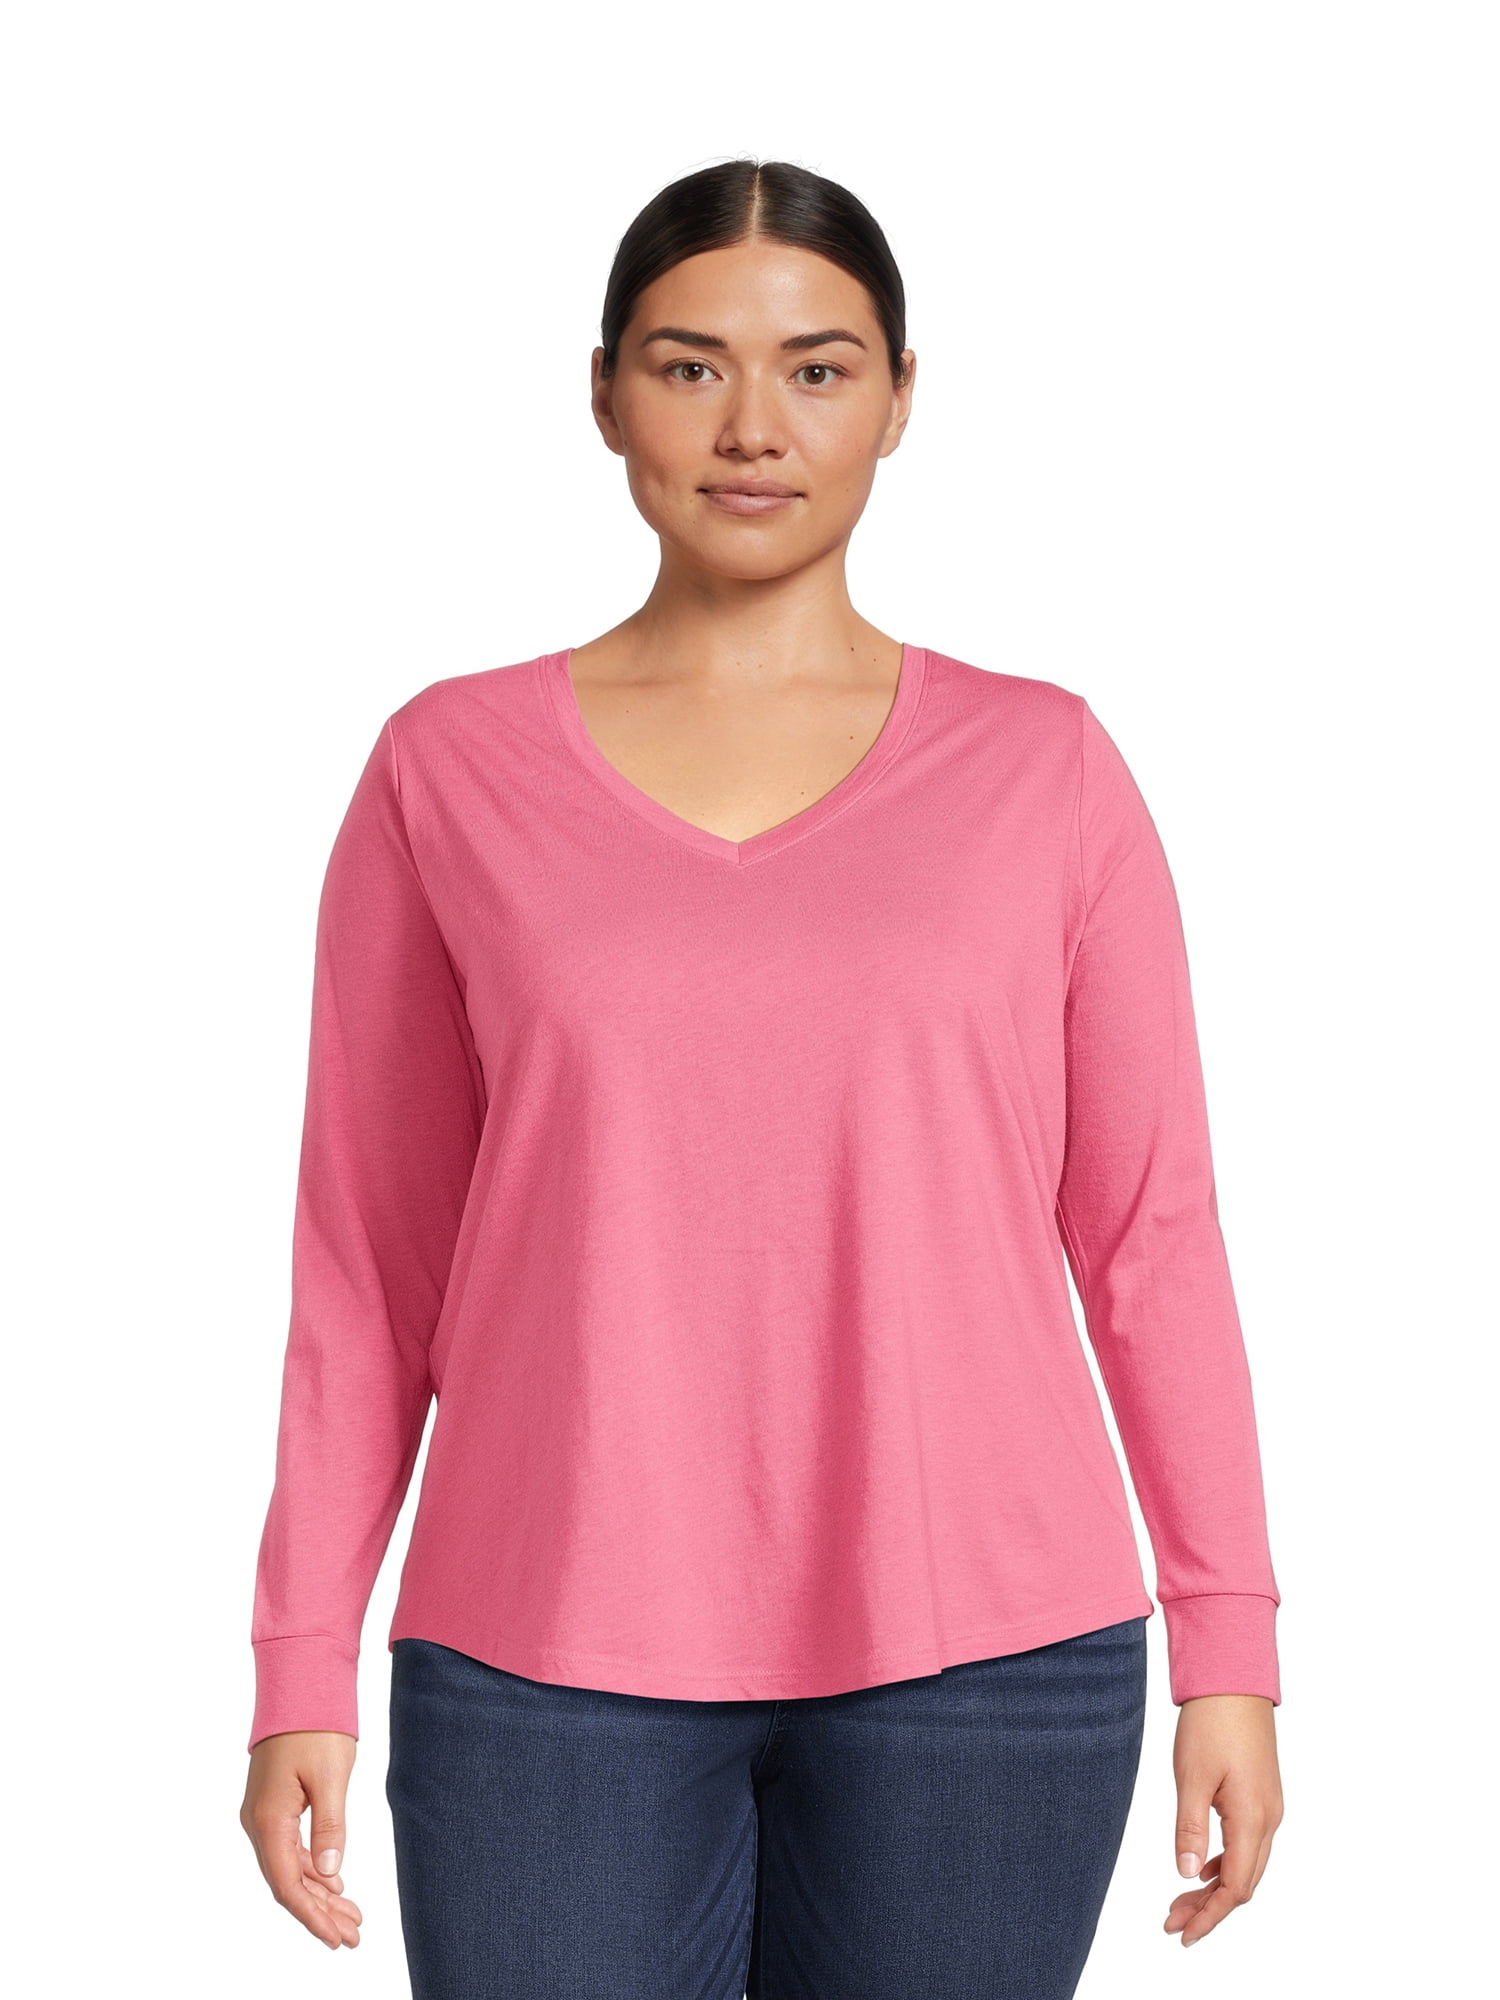 Terra & Sky Women's Plus Size Long Sleeve T-Shirt - Walmart.com